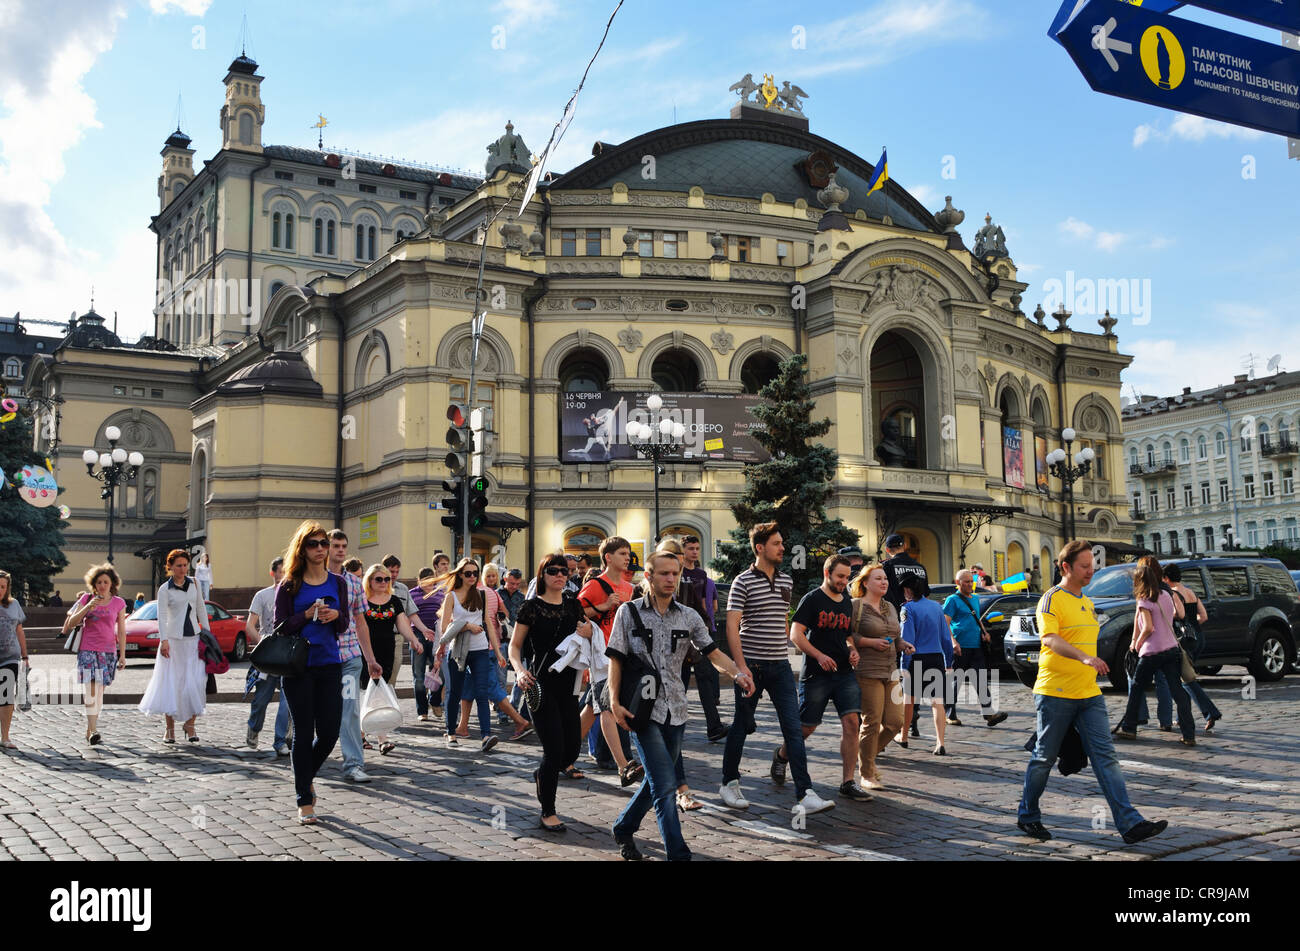 Ukrainian National Opera House in Kiev - Jun 2012 Stock Photo